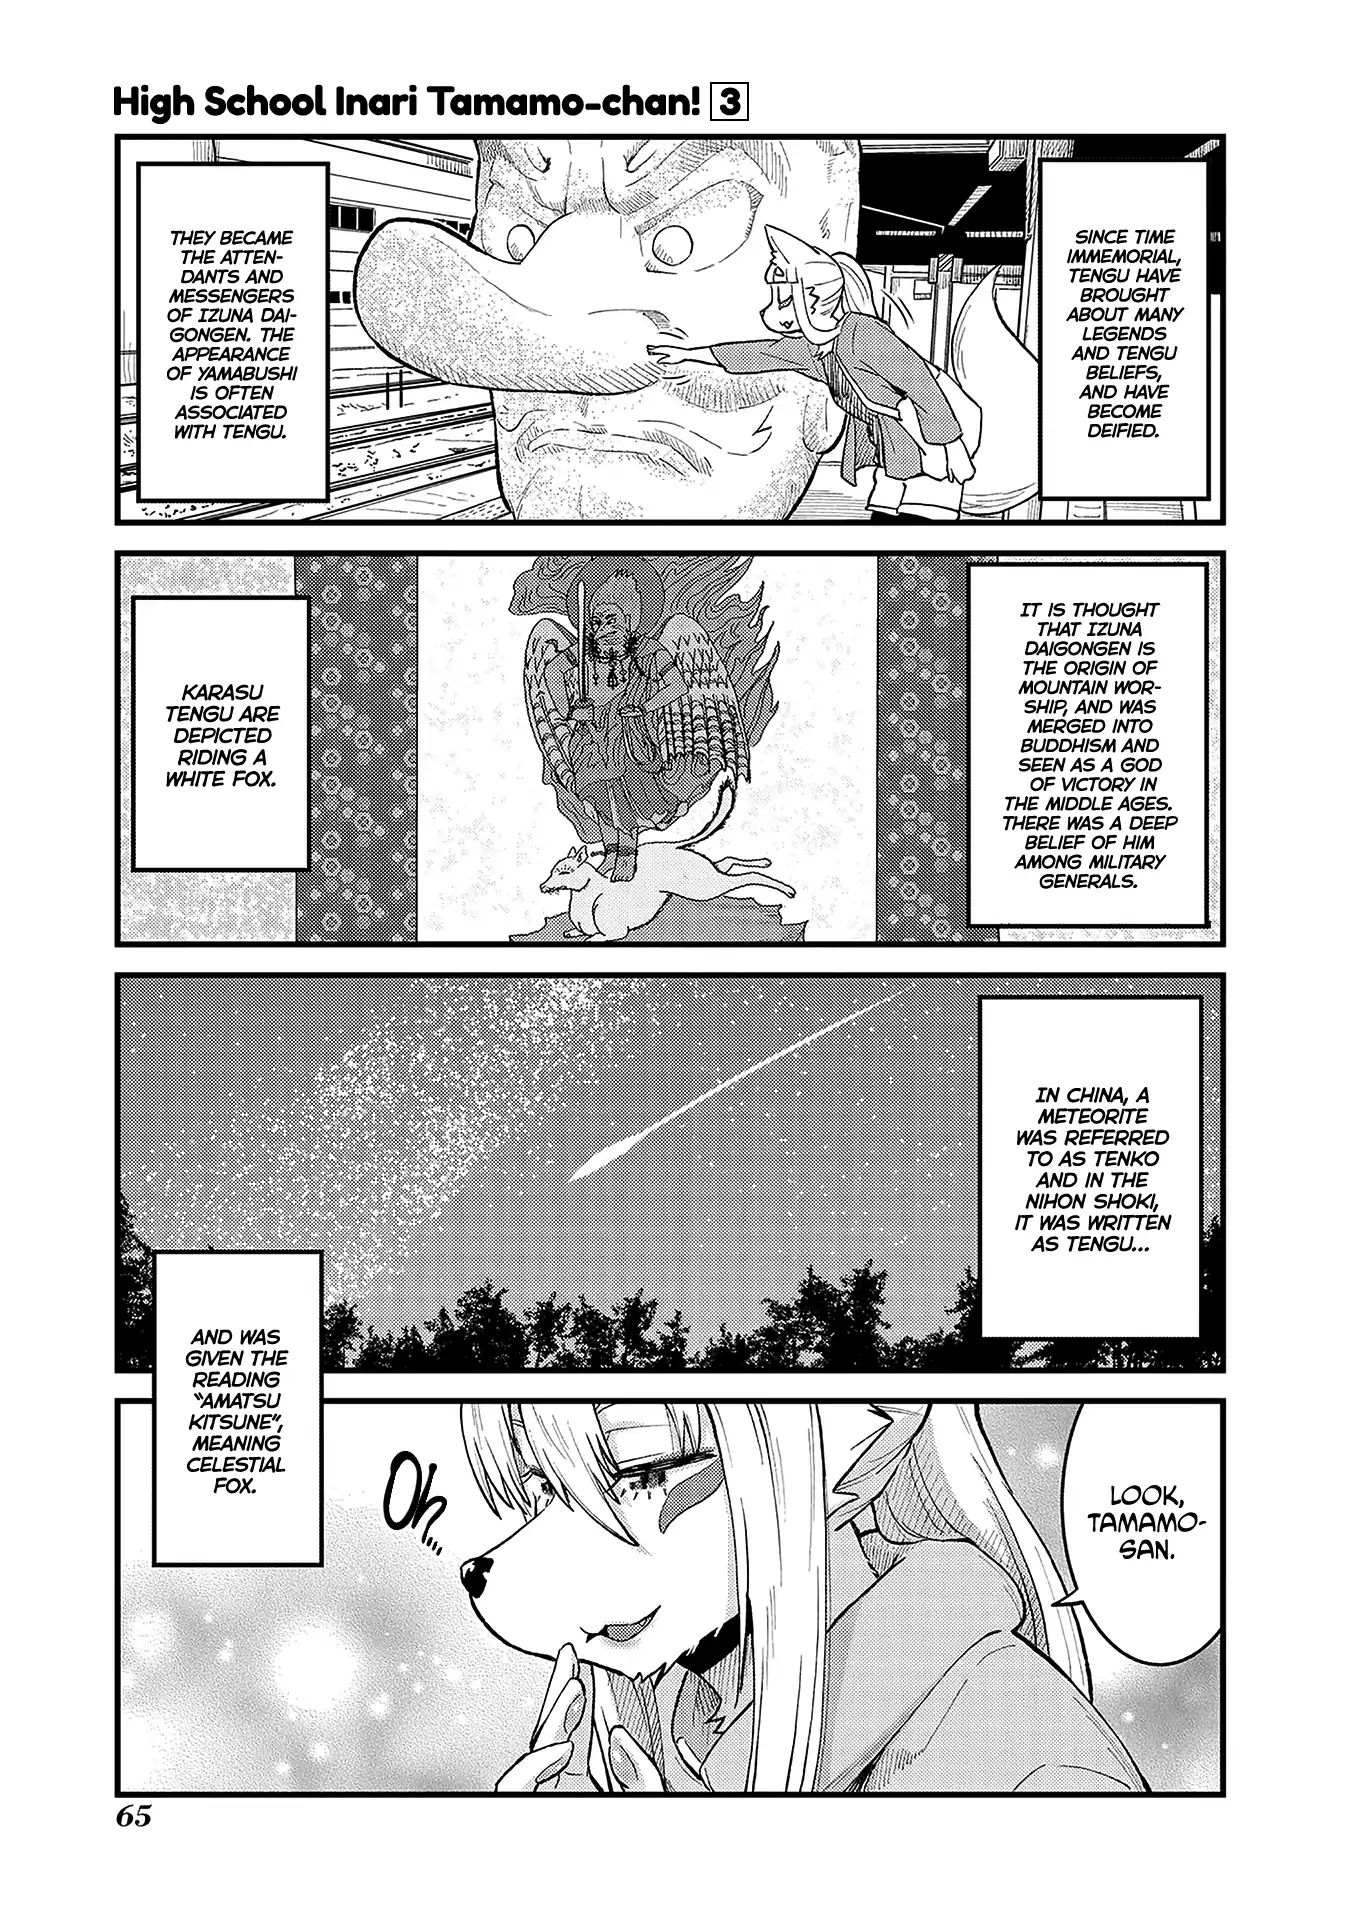 High School Inari Tamamo-chan! Vol.3 Chapter 39